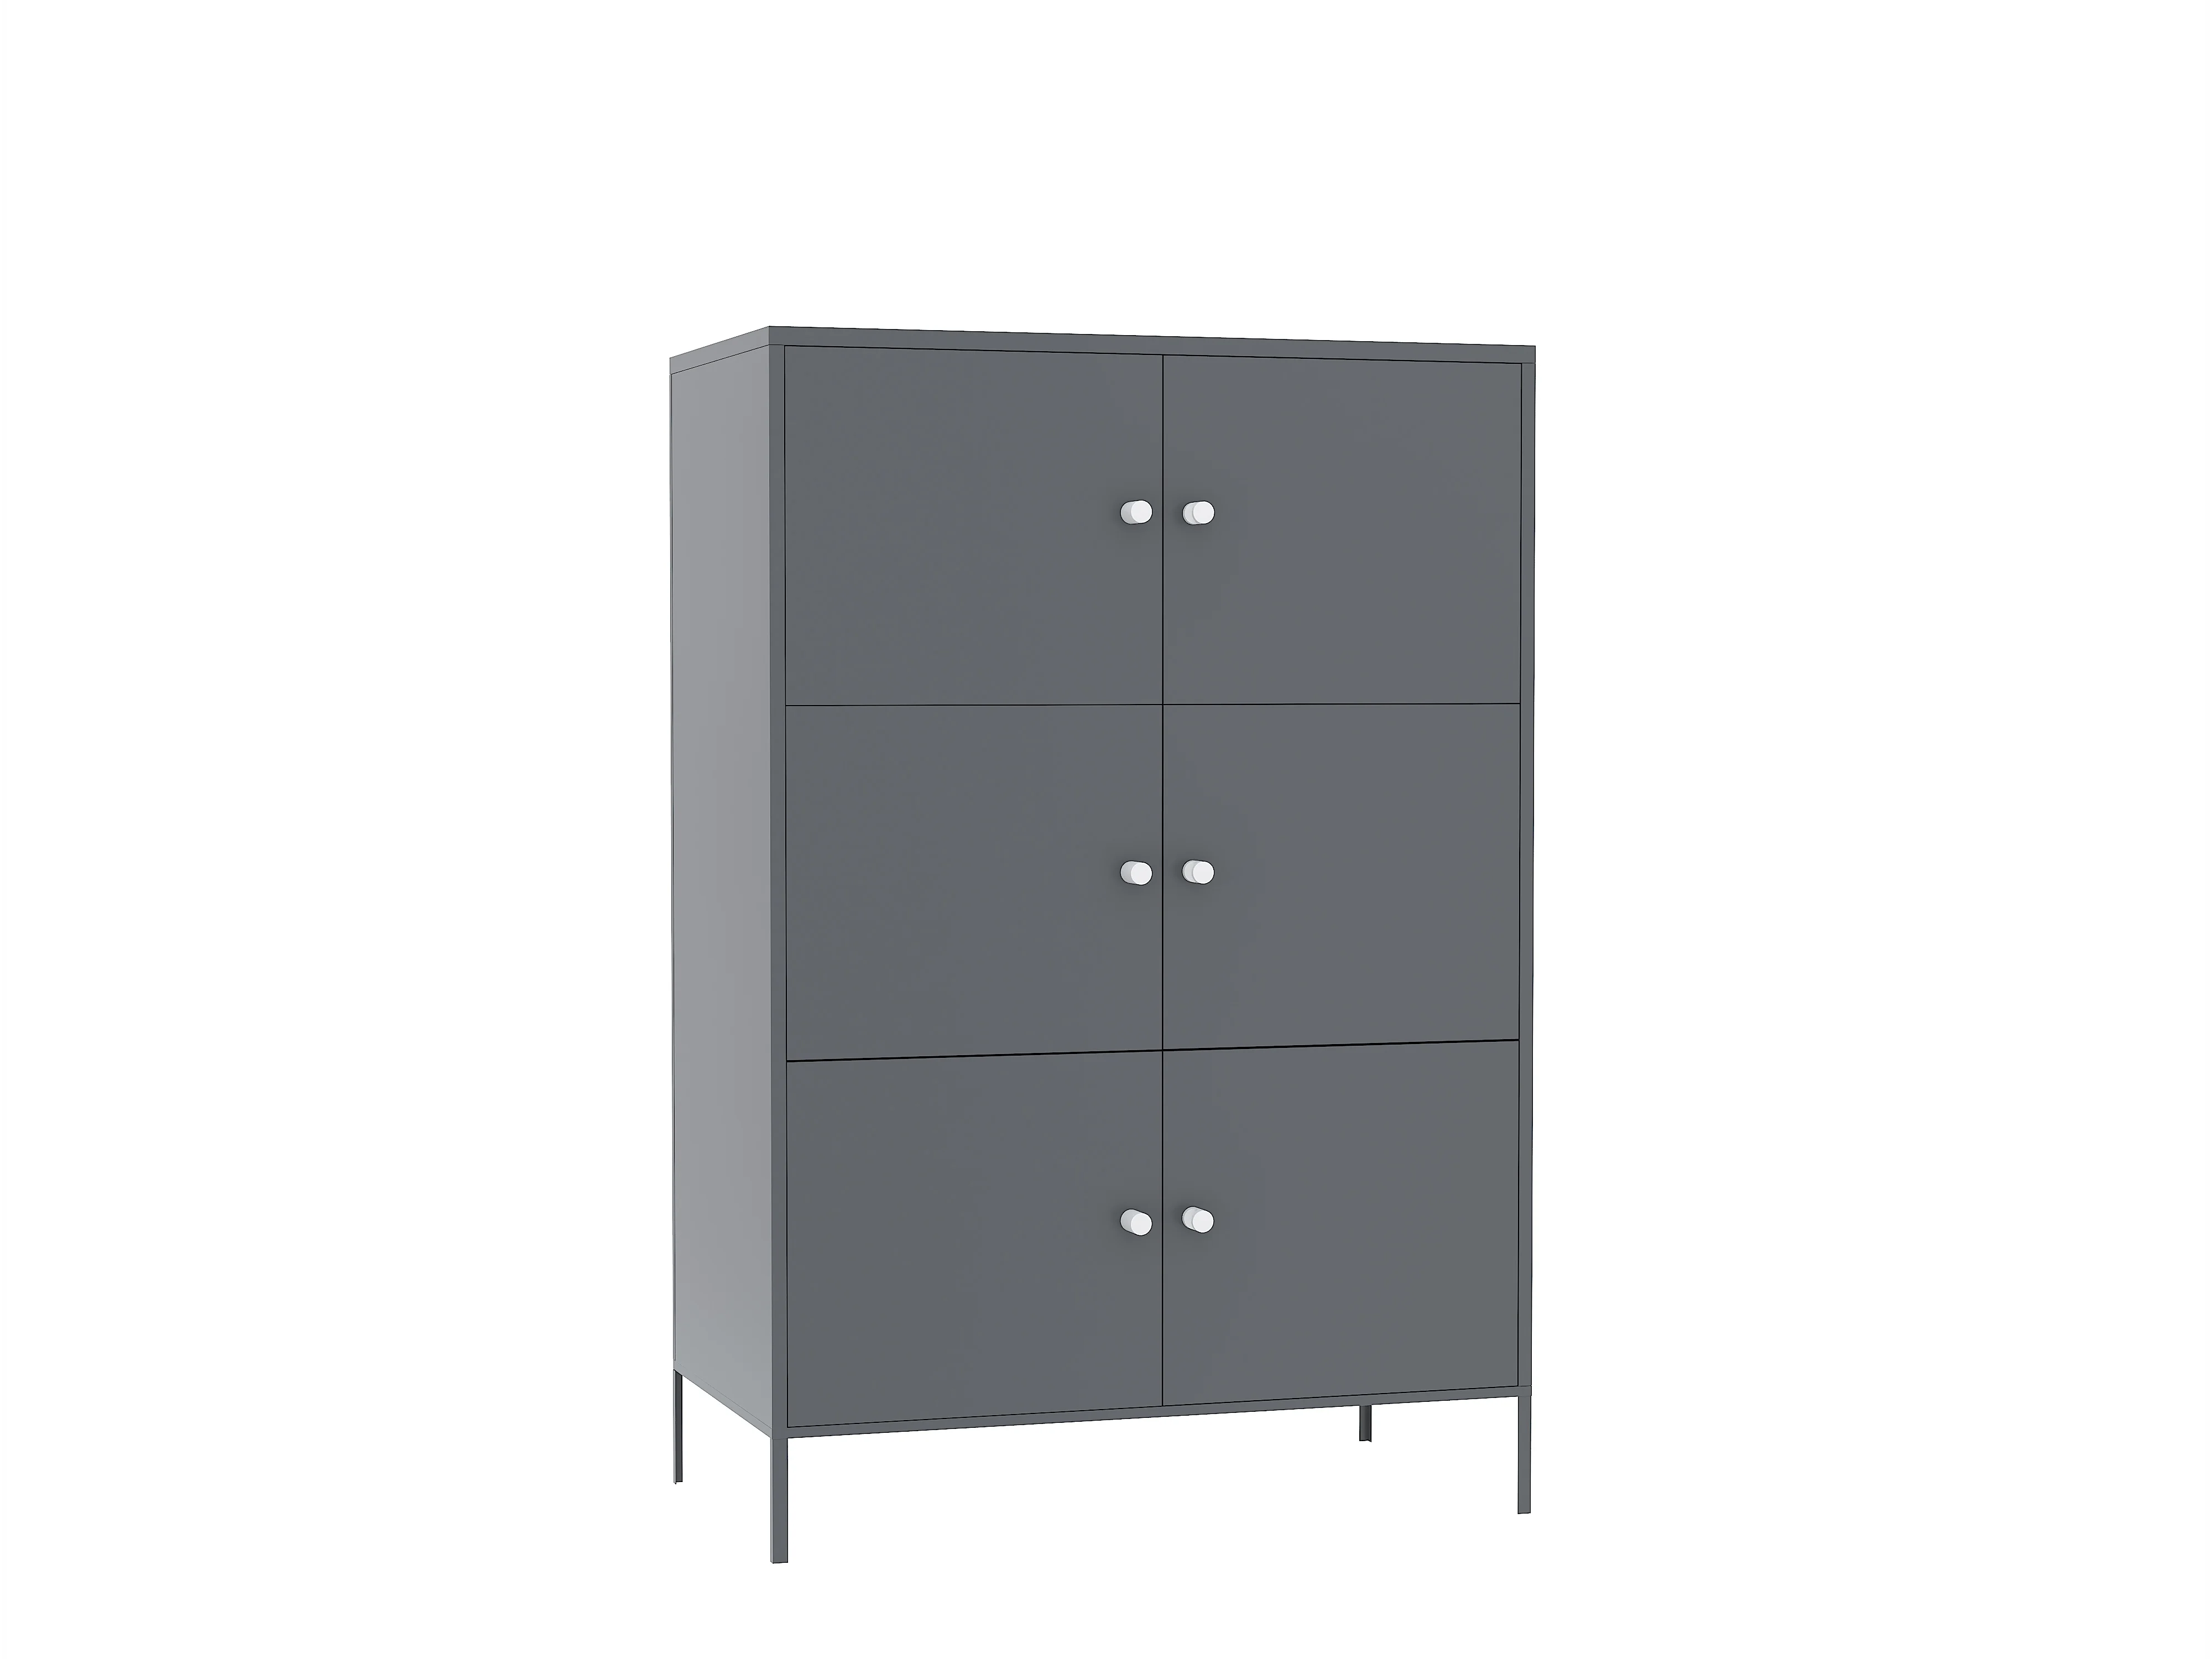 

Storage Cabinet, 3-Tier Metal Office Cabinet, Multipurpose Storage Organiser Stand with 6 Doors, Gray